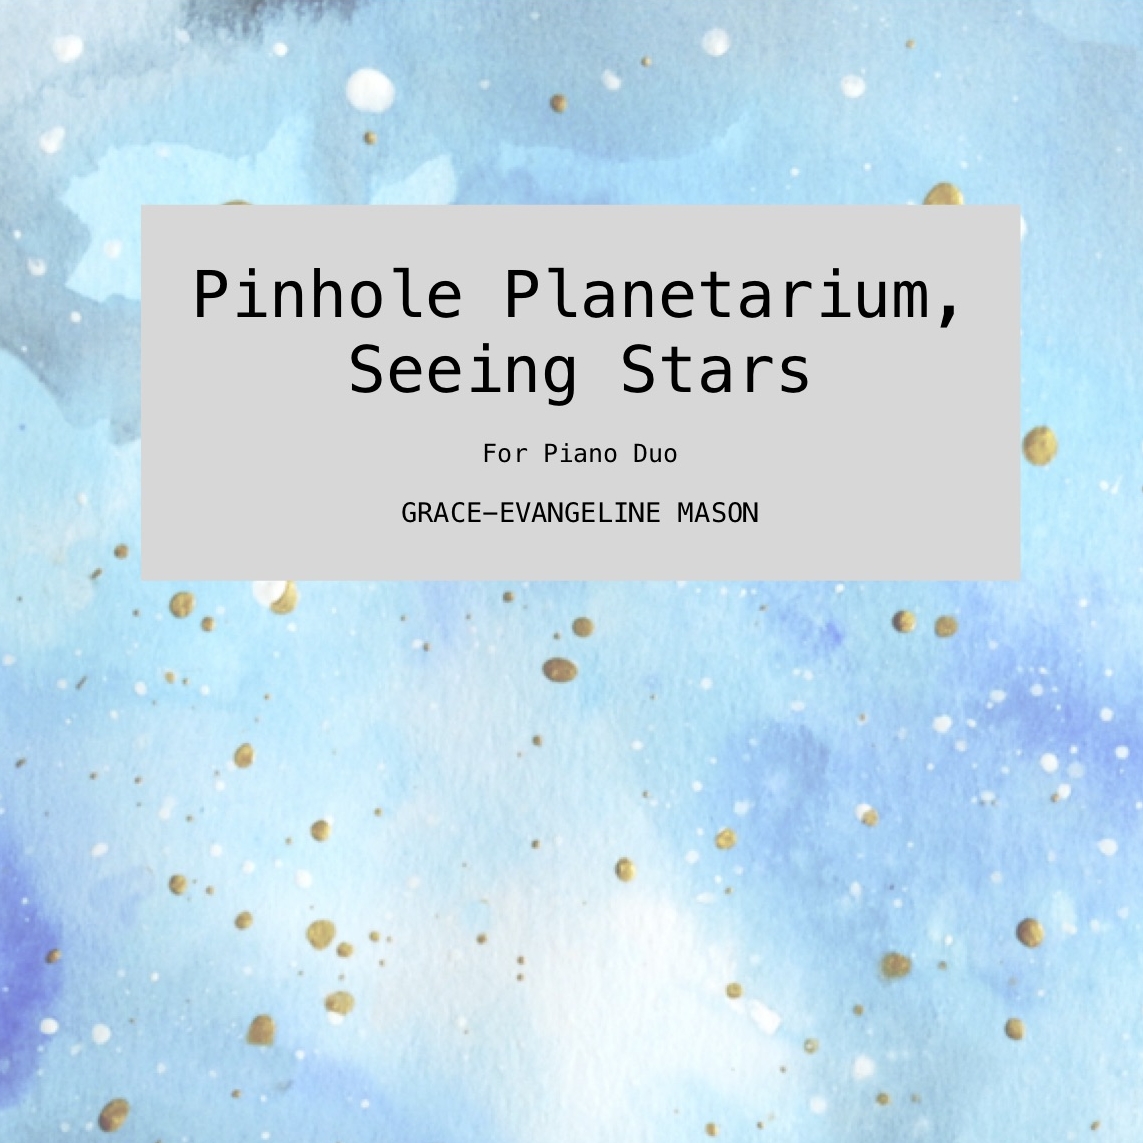 Pinhole Planetarium, Seeing Stars' (2018